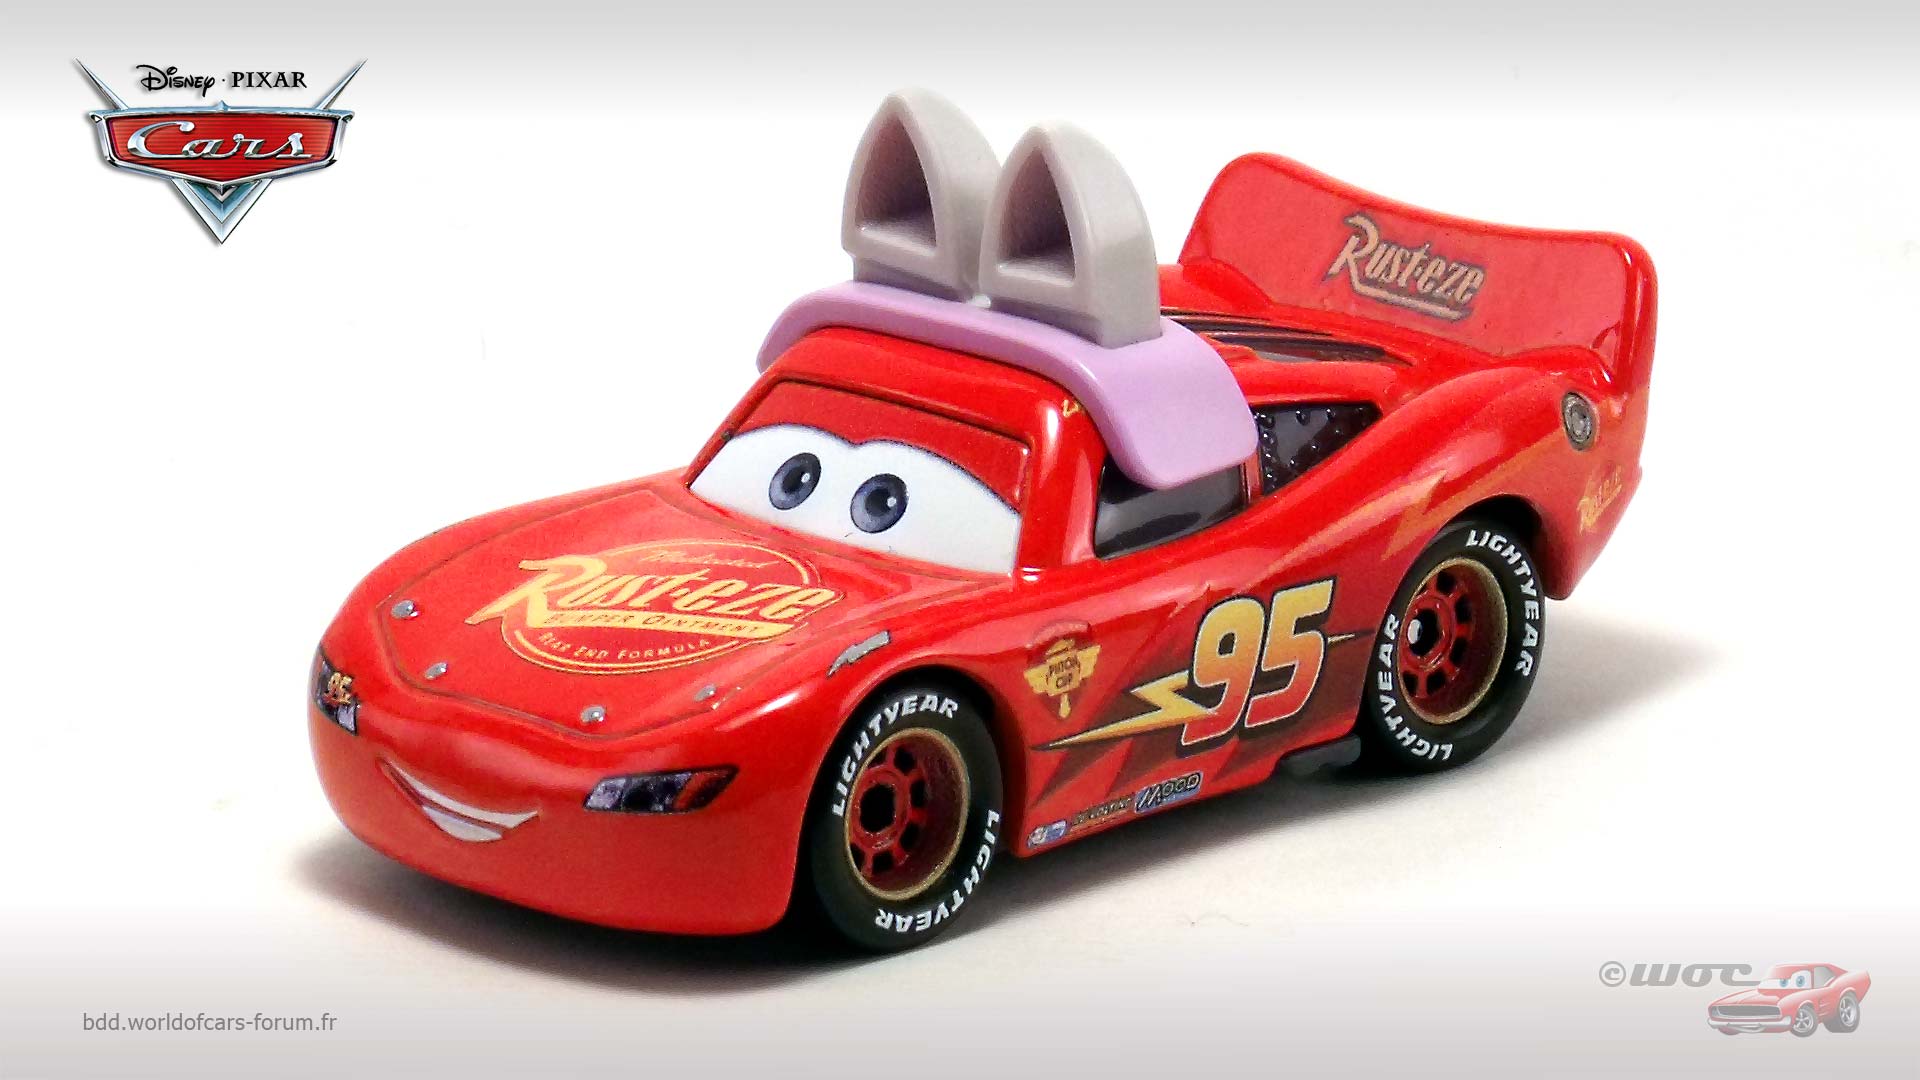 Lightning McQueen as Easter Buggy